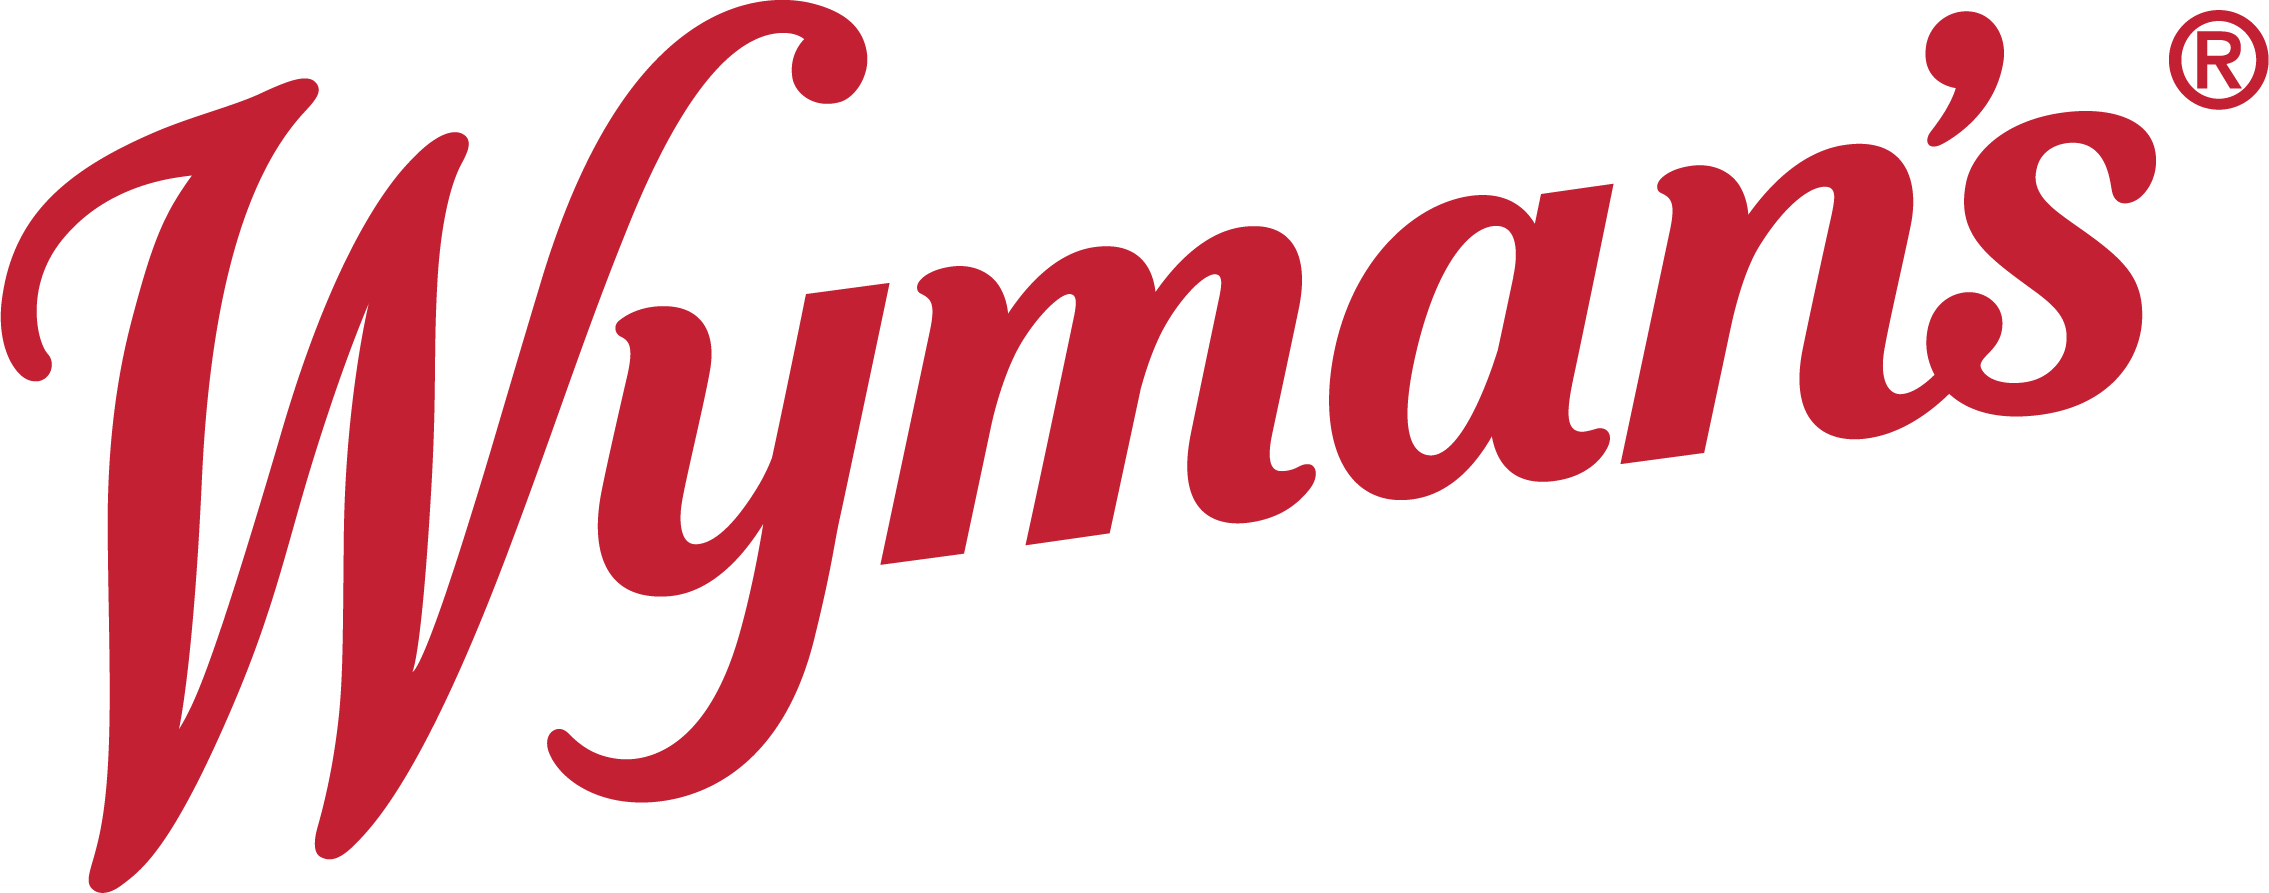 Wymans Logo.png (1).png